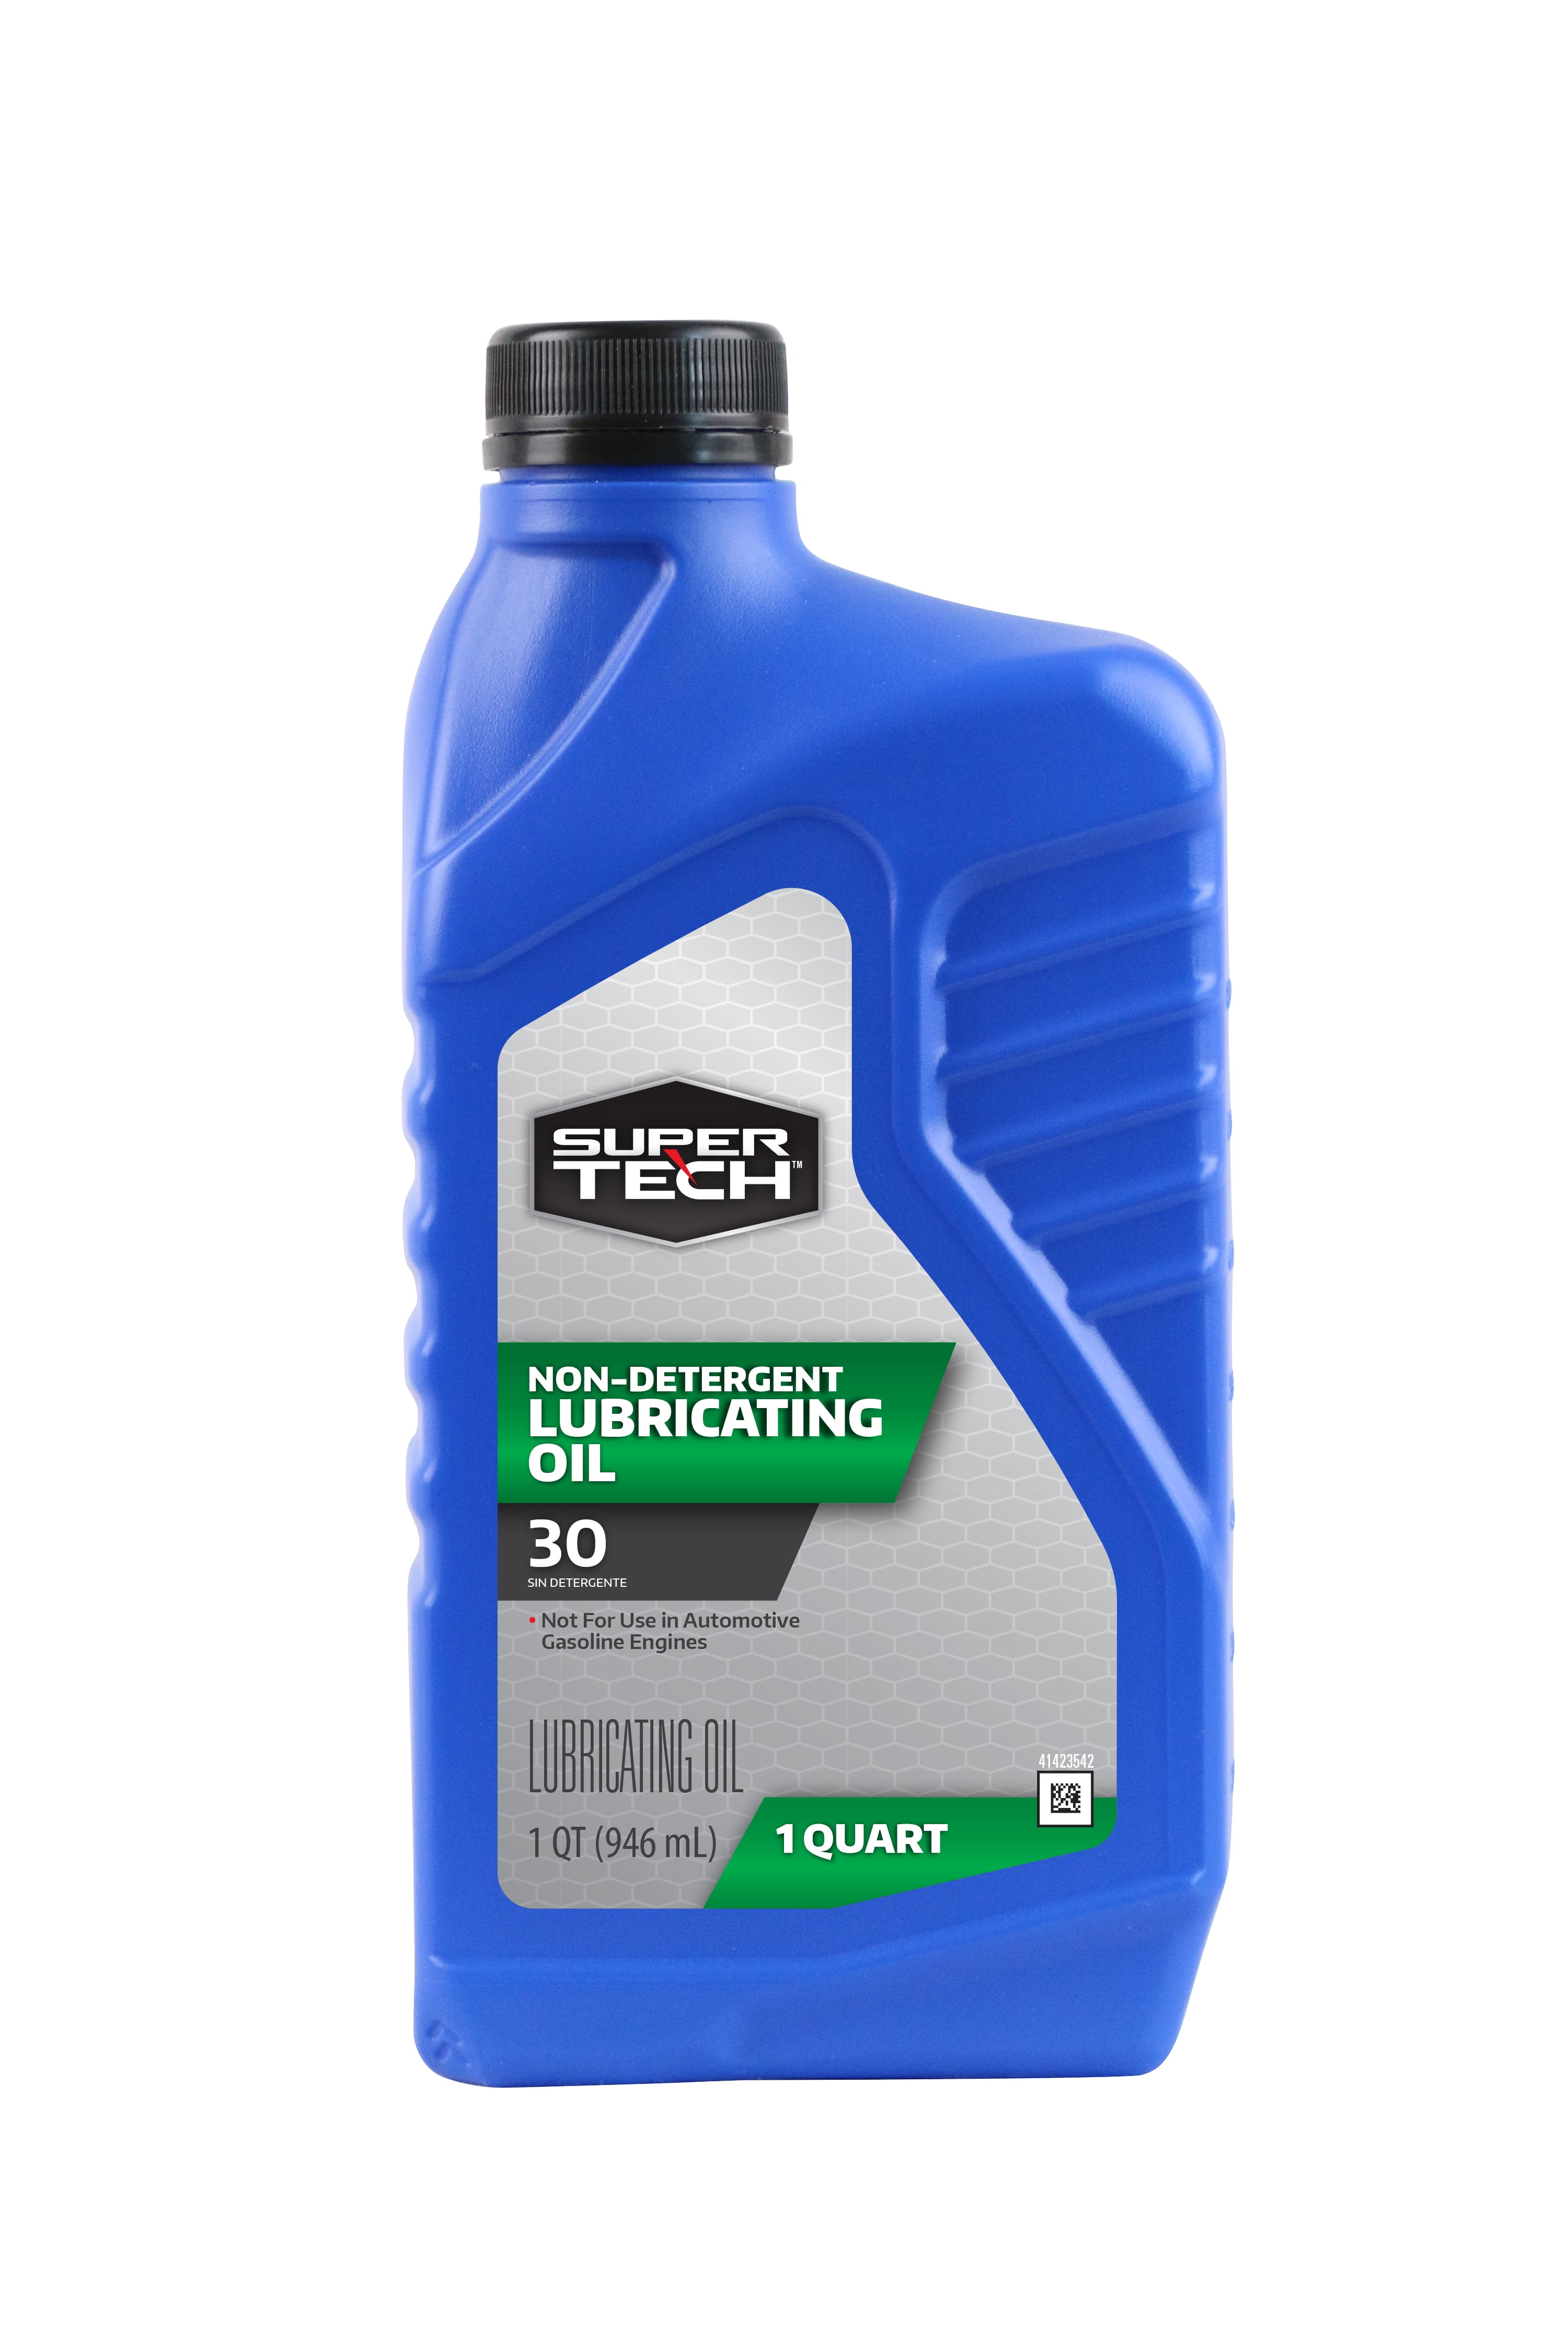 Super Tech Non-Detergent SAE 30W Lubricating Oil, 1 Qt